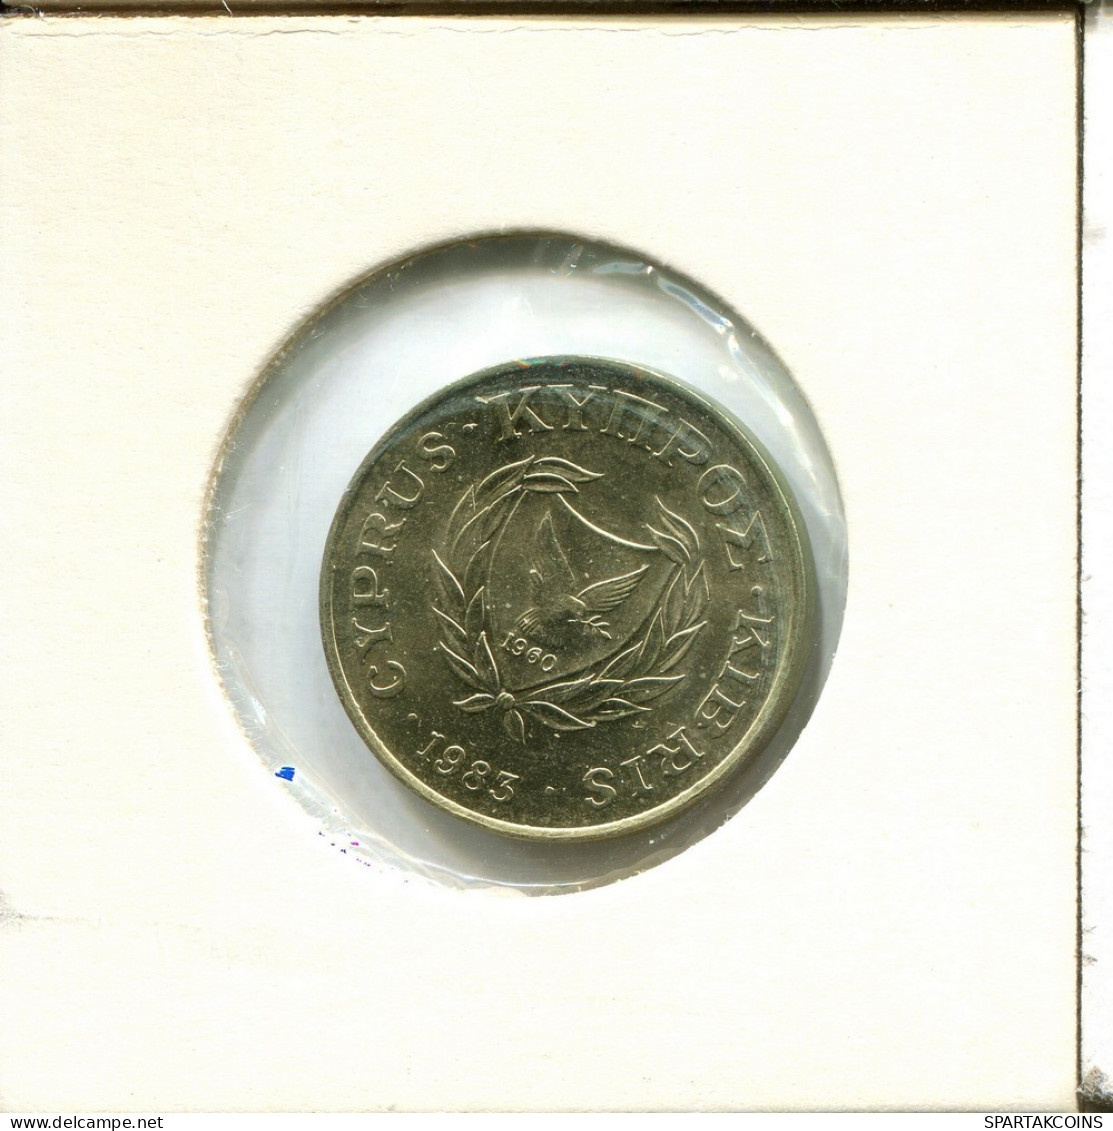 2 CENTS 1983 CYPRUS Coin #AU771.U.A - Chipre